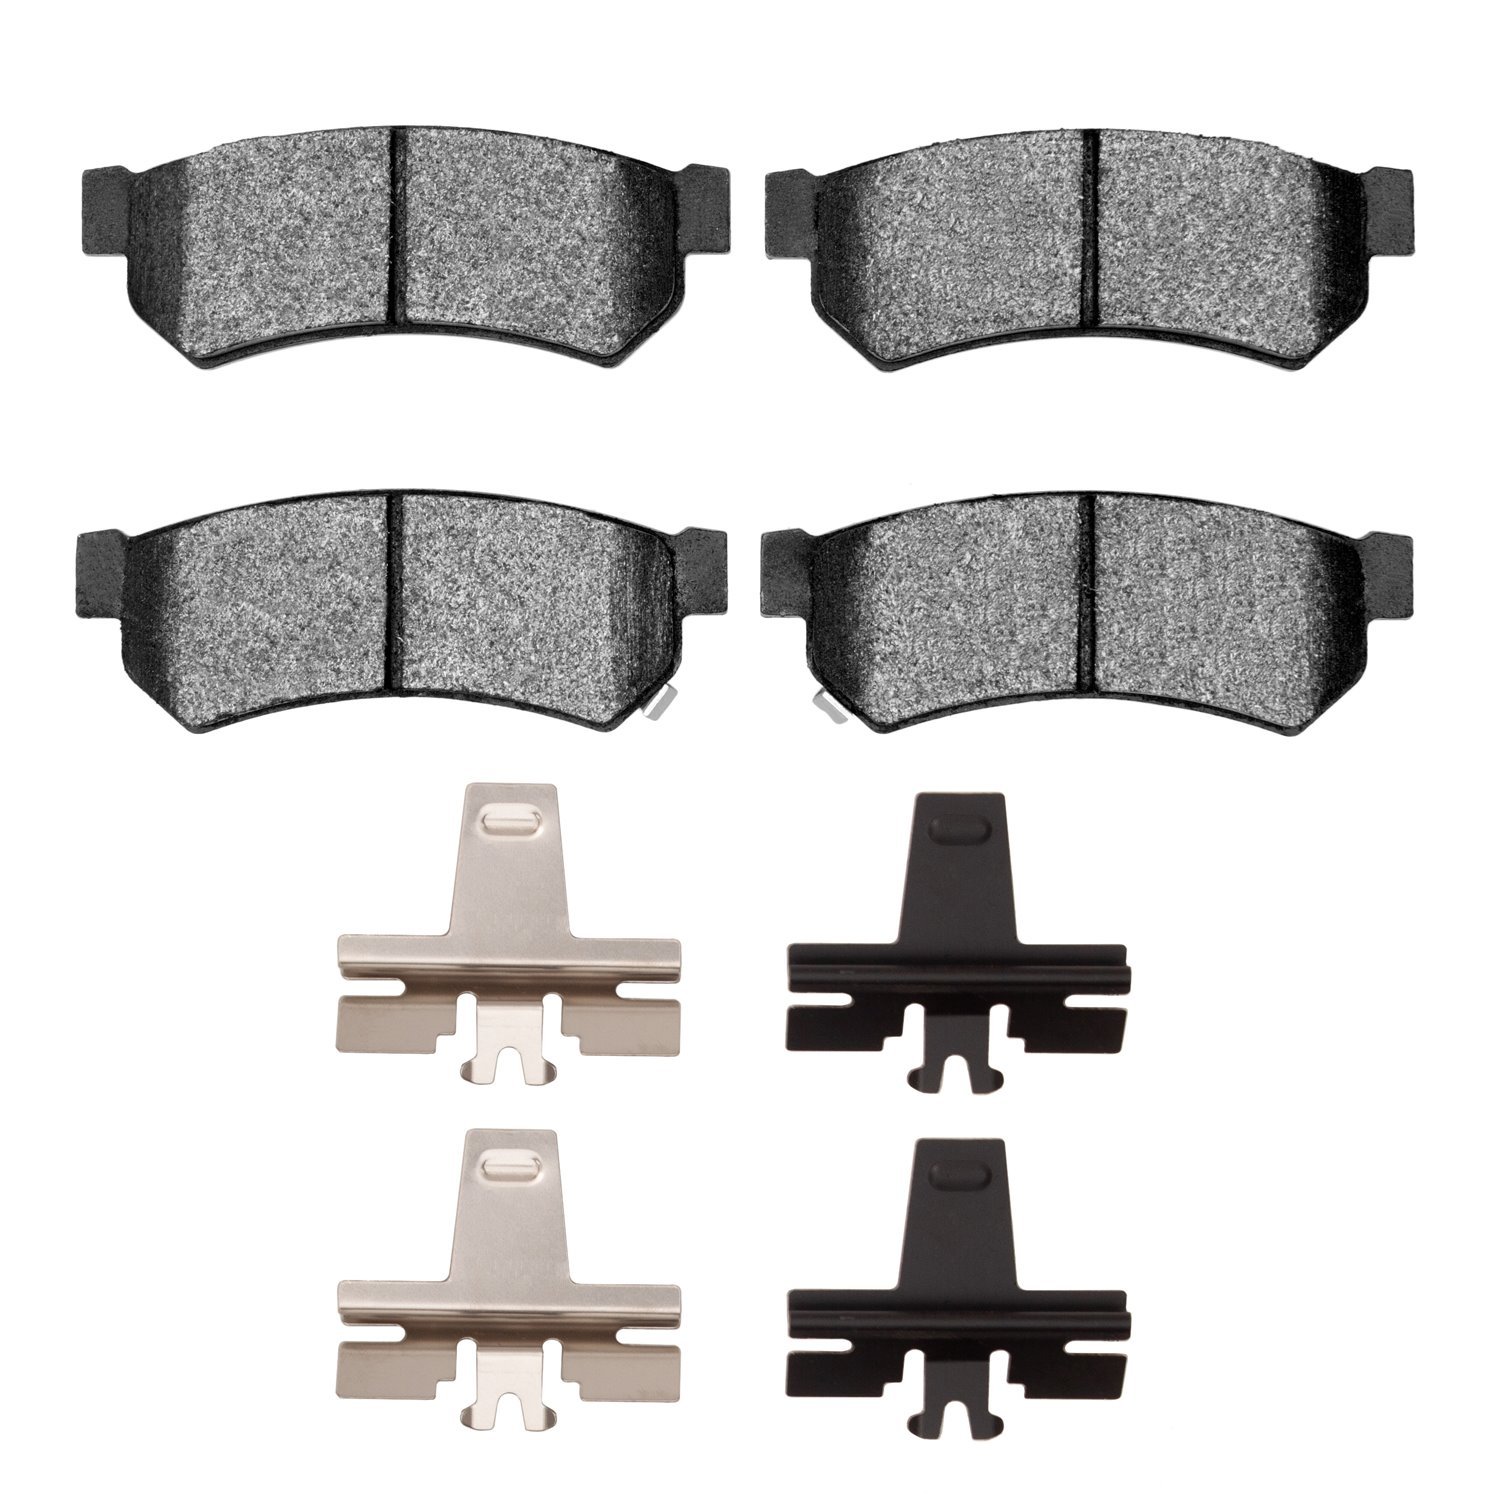 Optimum OE Brake Pads & Hardware Kit, 2007-2016 Fits Multiple Makes/Models, Position: Rear